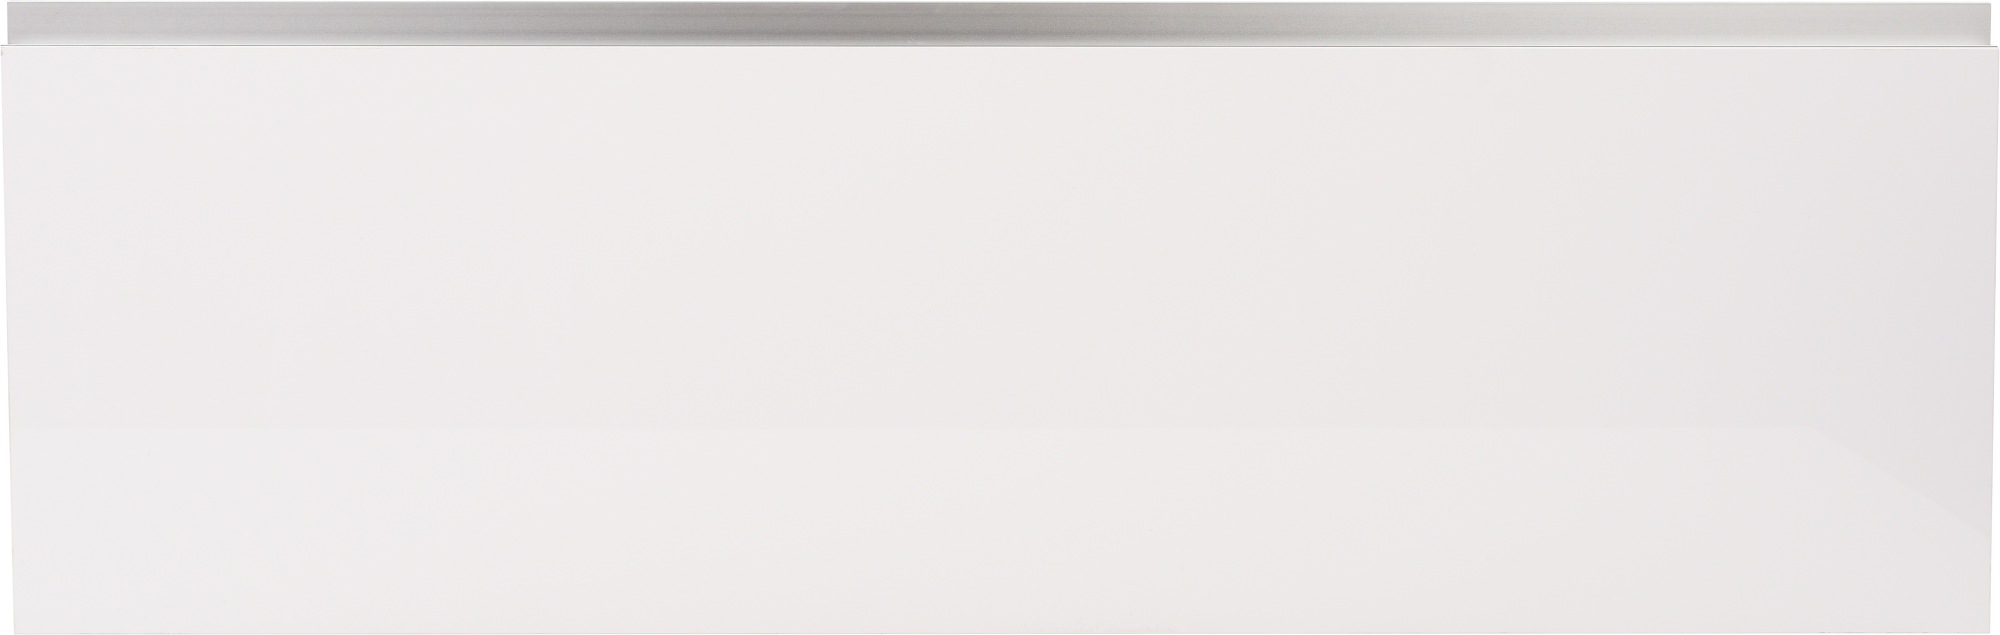 Frente para cajón mikonos blanco brillo 119,7x38,1 cm